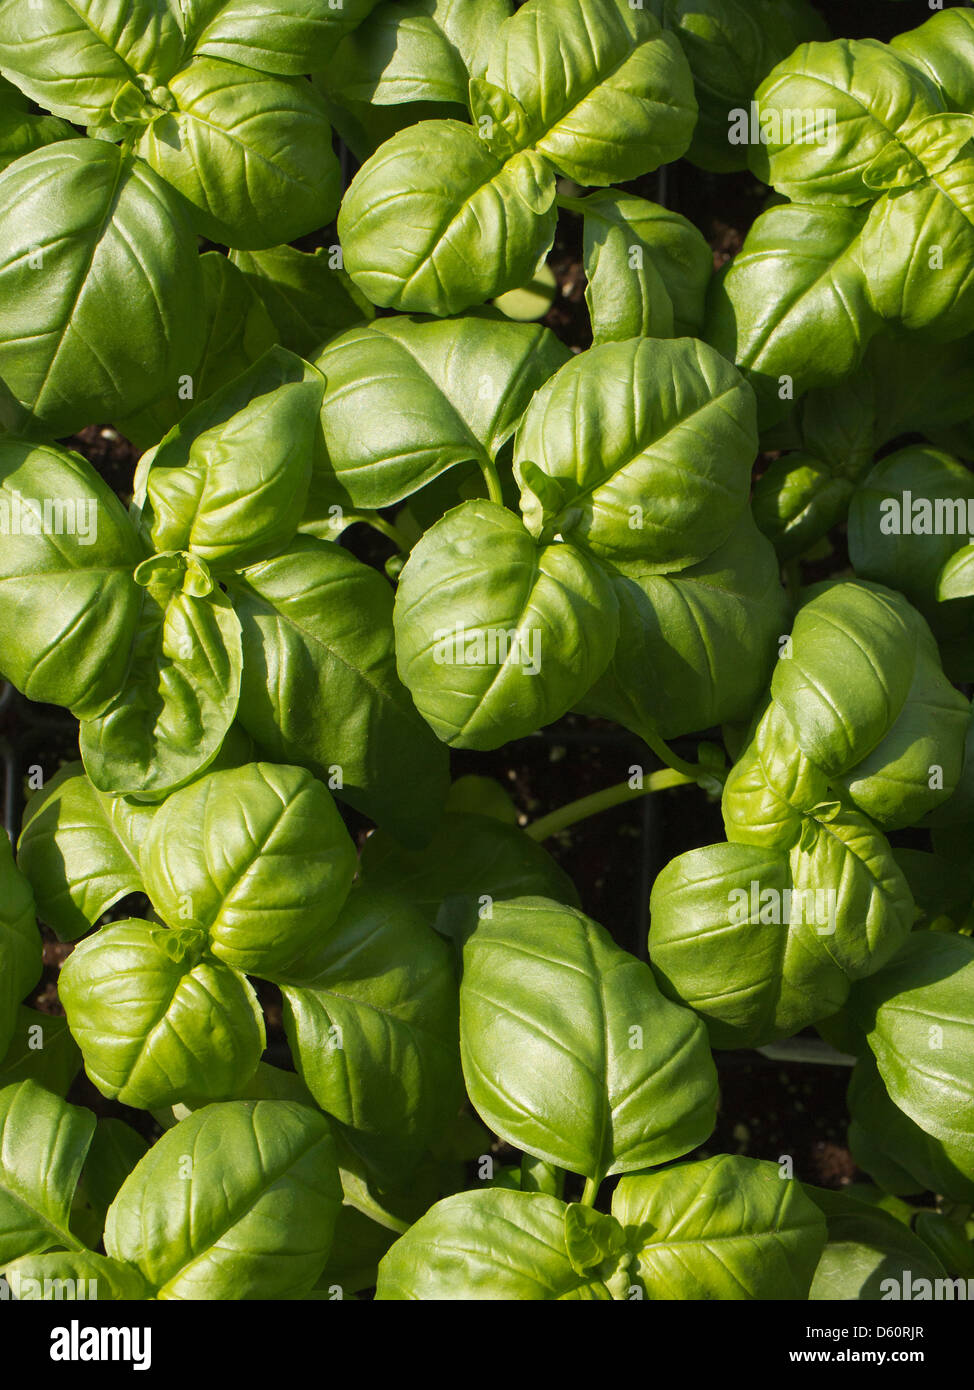 basil plants at an outdoor market Stock Photo